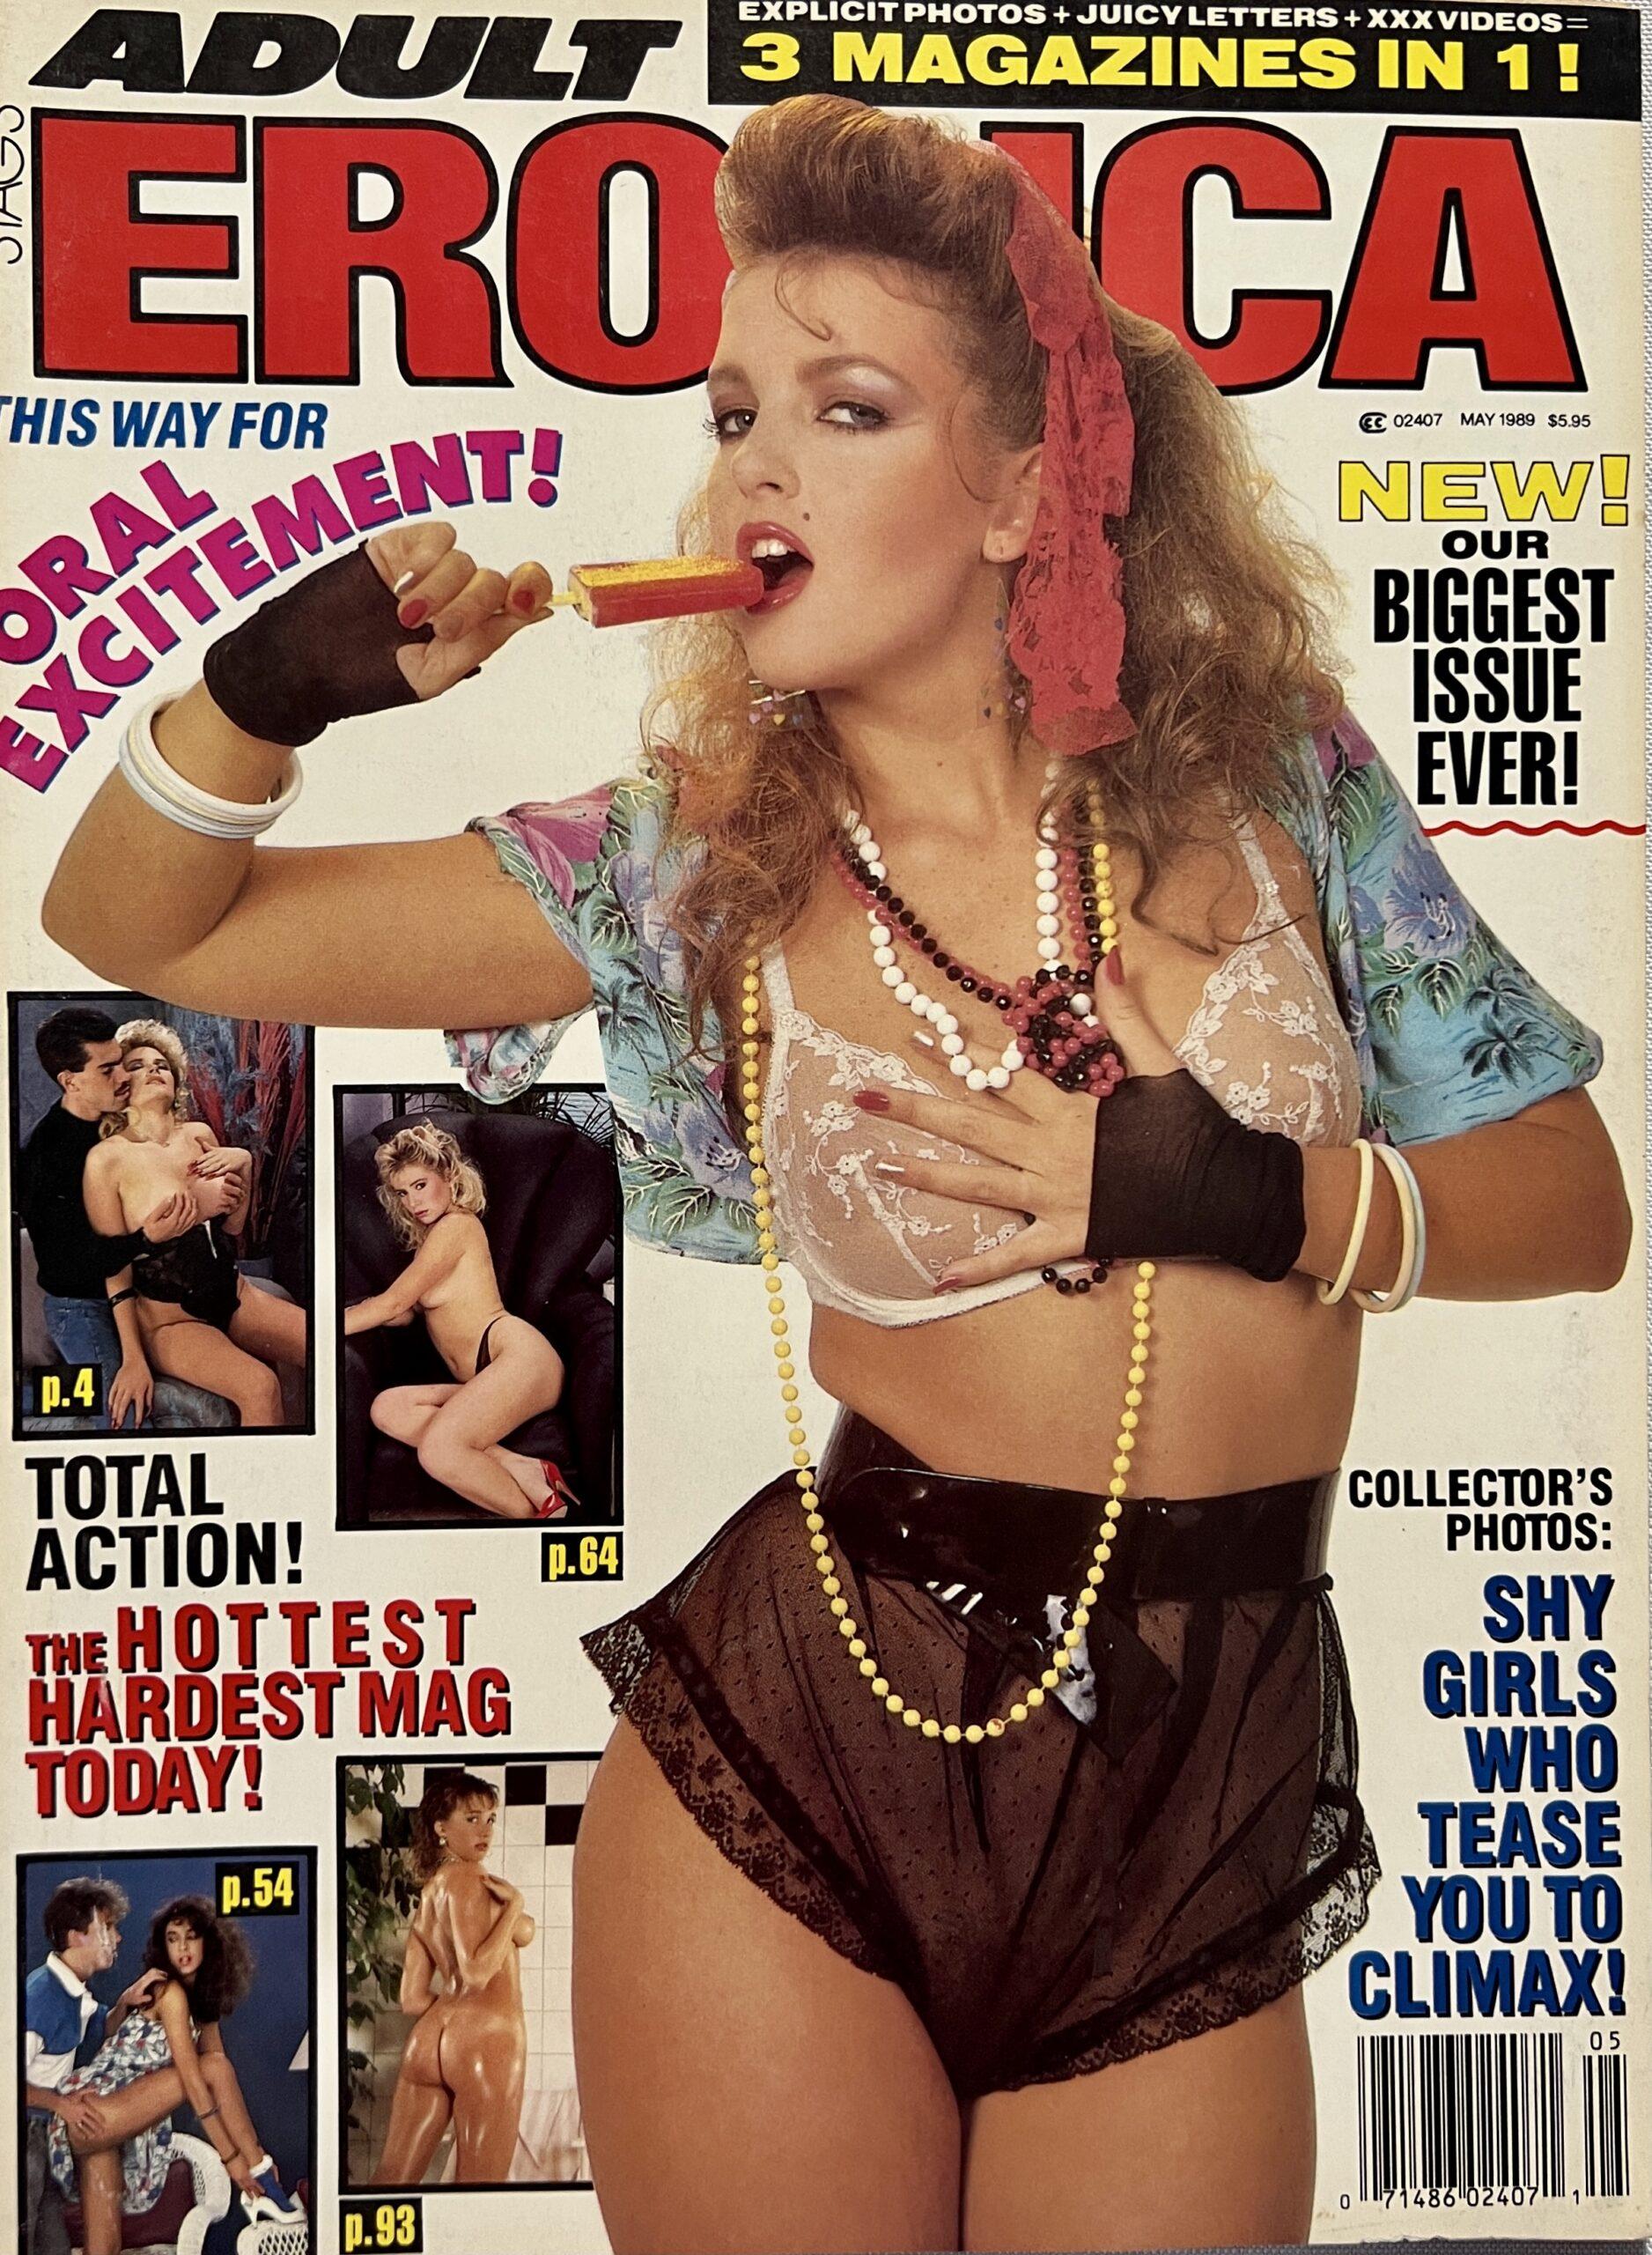 Vintage Erotica Oral - Stag's Adult Erotica May 1989 Adult Magazine - Vintage Magazines 16